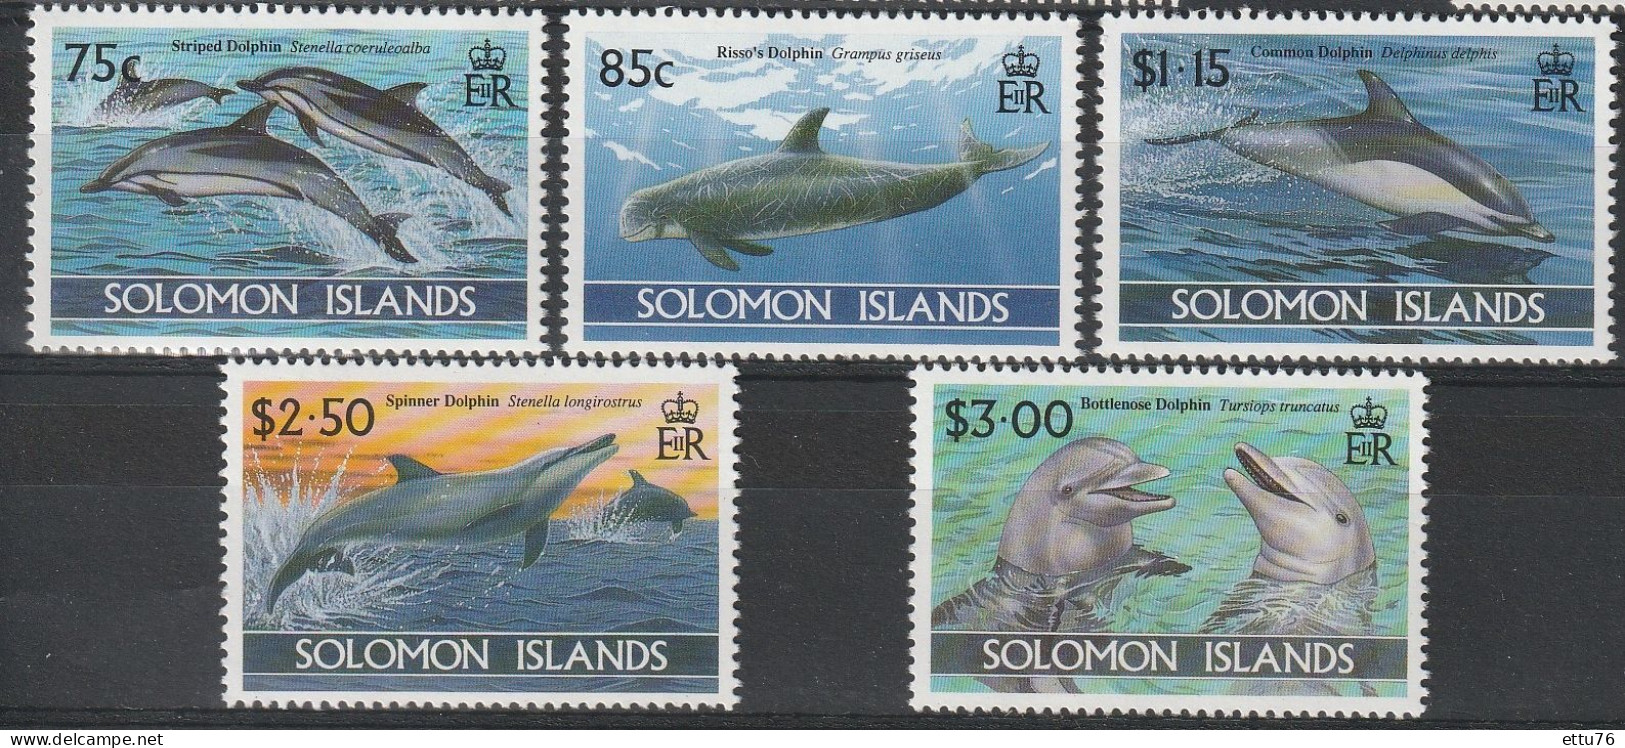 Solomon Islands 1994  Dolphins  Set  MNH - Delfines